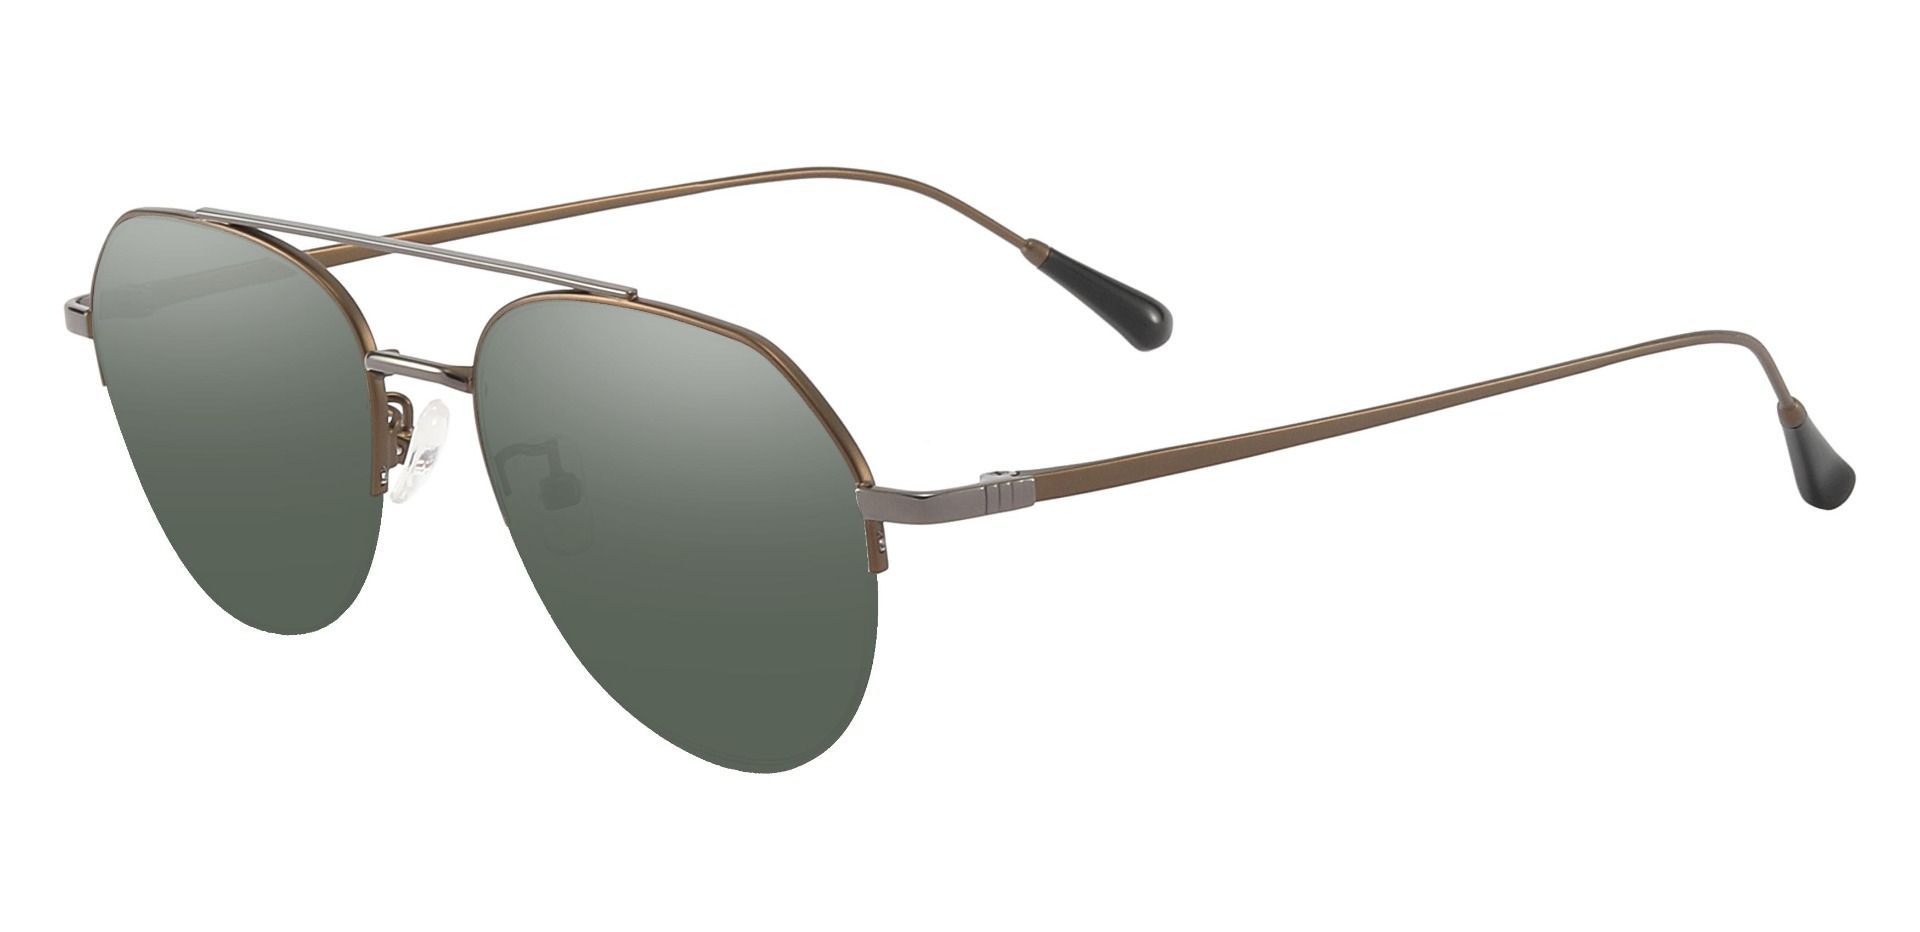 Waldorf Aviator Progressive Sunglasses - Brown Frame With Green Lenses